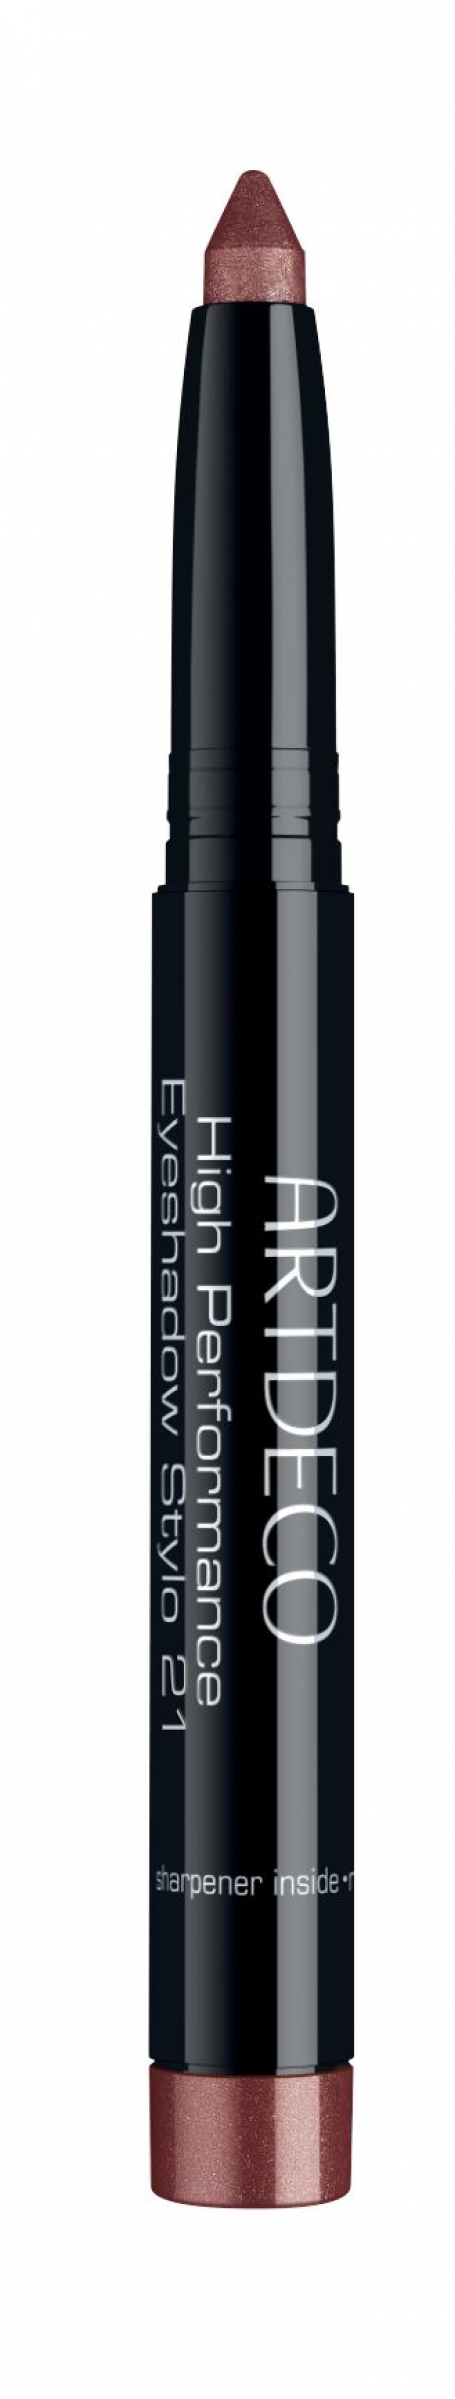 High performance eye shadow stylo #21 Shimmering cinnamon - kopie